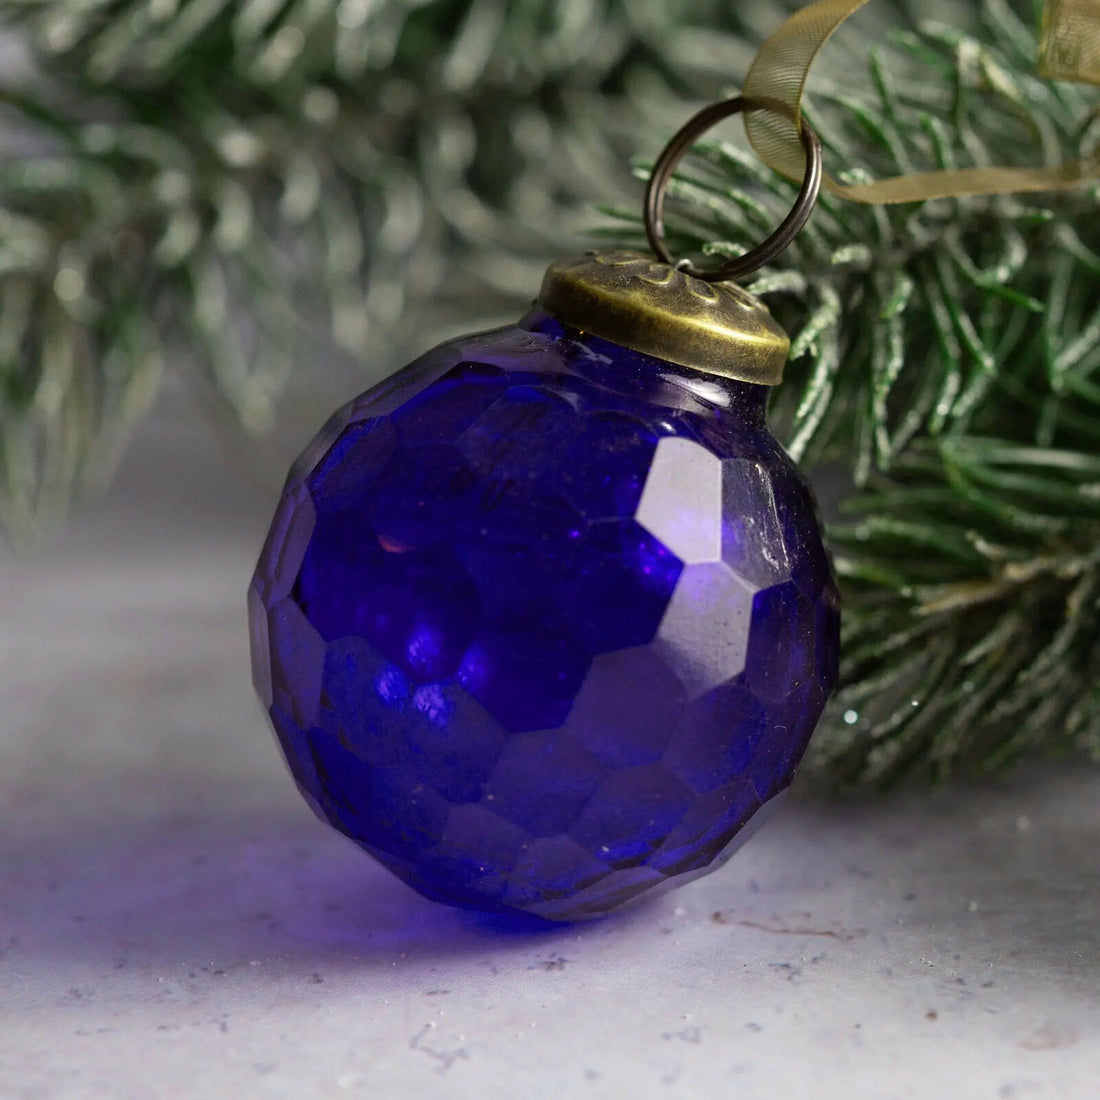 Christmas Handmade 2” Medium Cut Glass Ornament Christmas Bauble - The Primitive Pineapple Collection